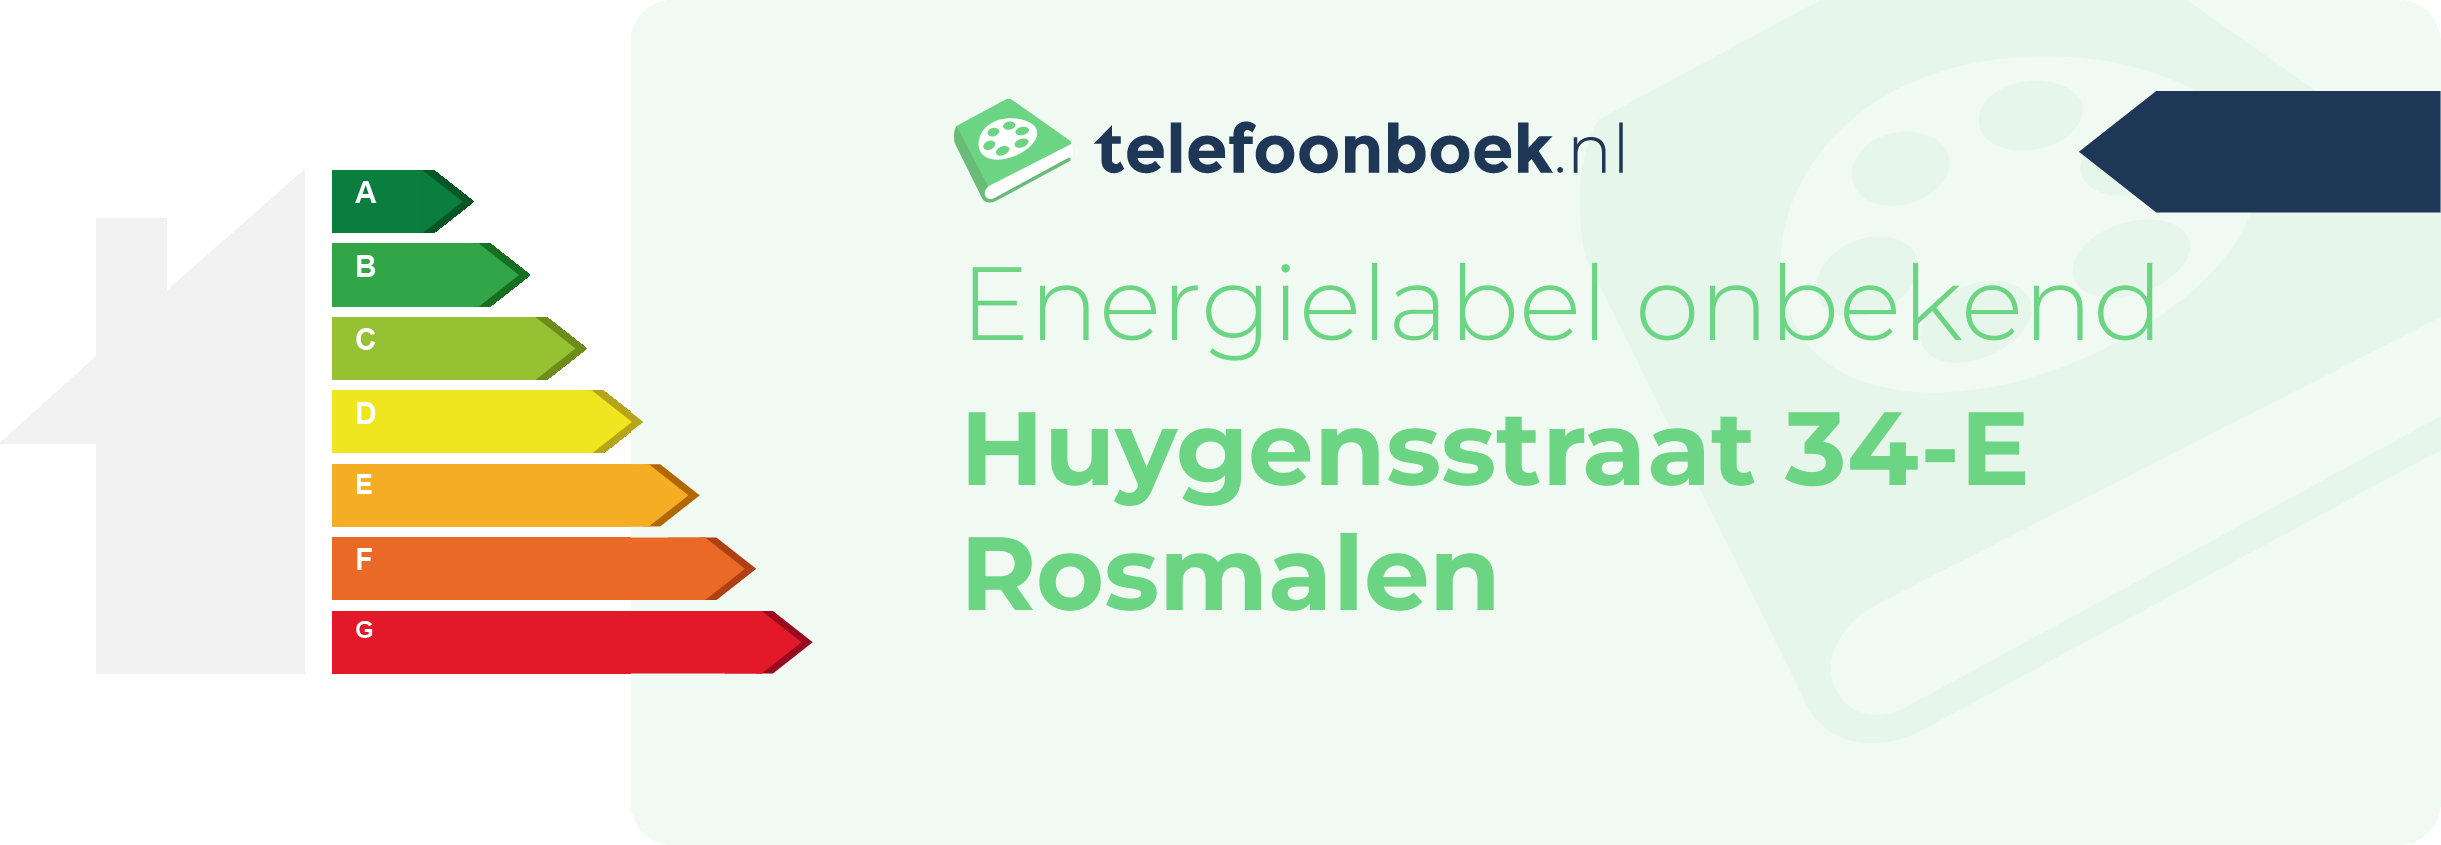 Energielabel Huygensstraat 34-E Rosmalen